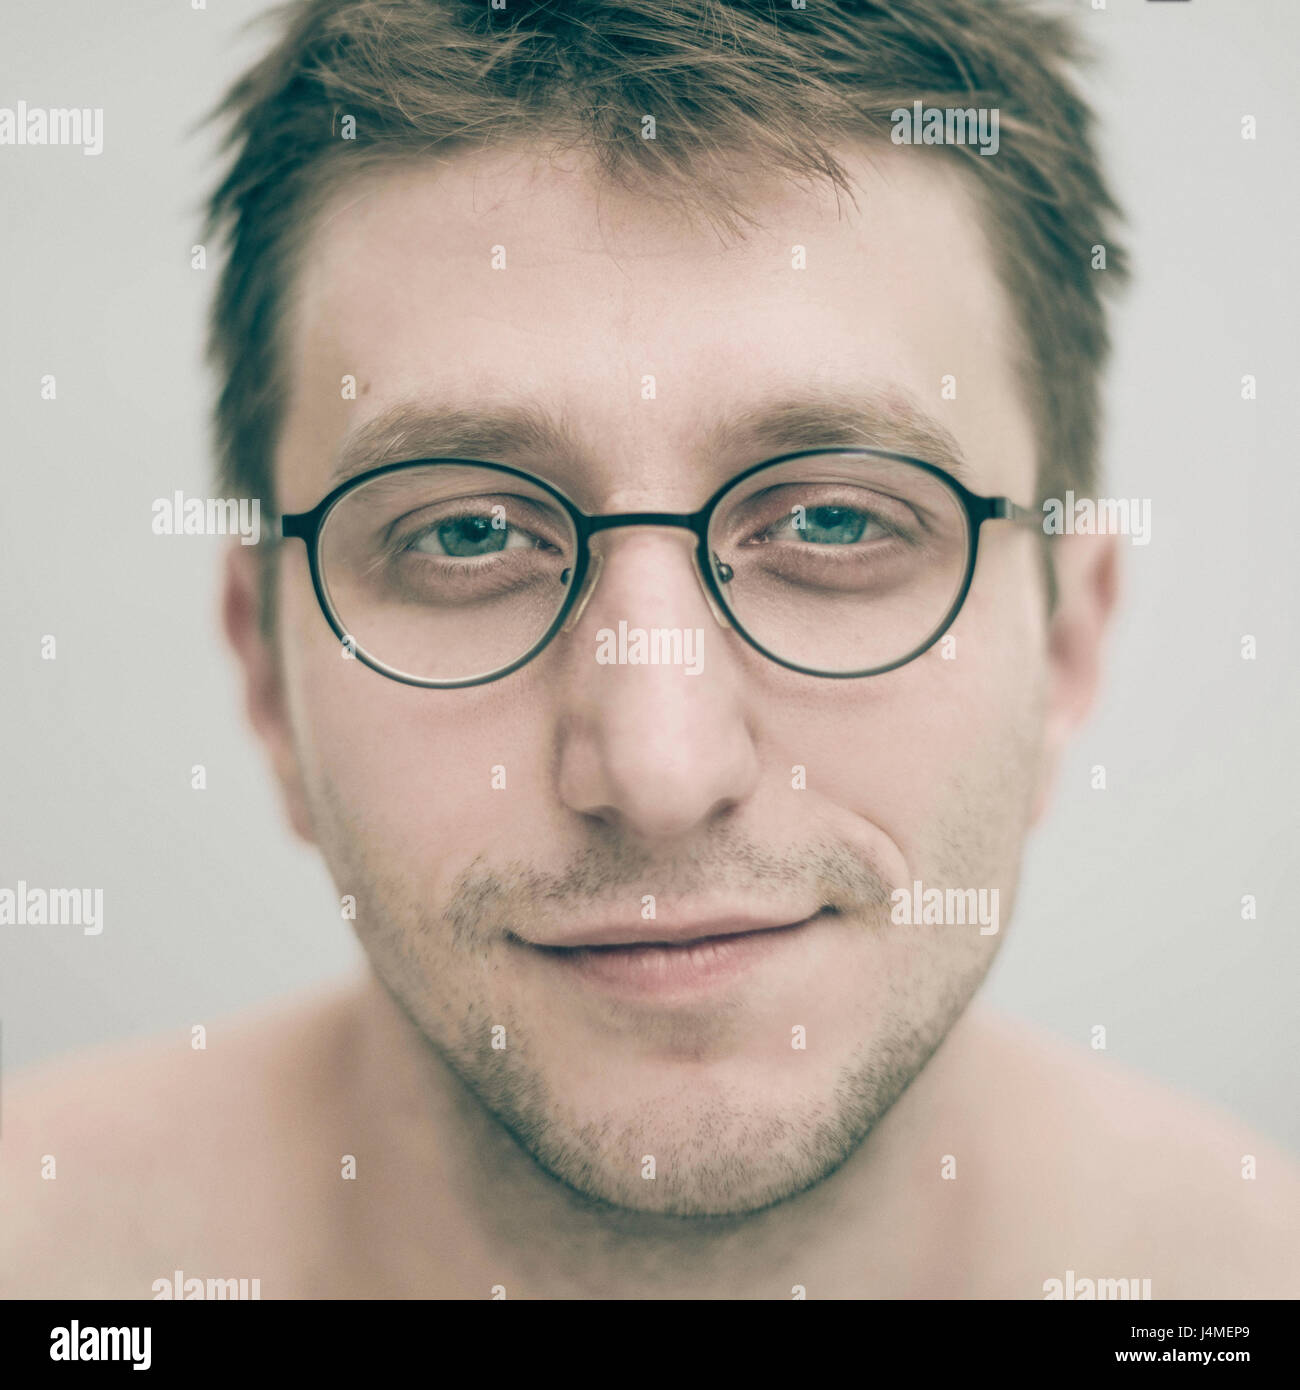 Portrait of smiling Caucasian man wearing eyeglasses Stock Photo